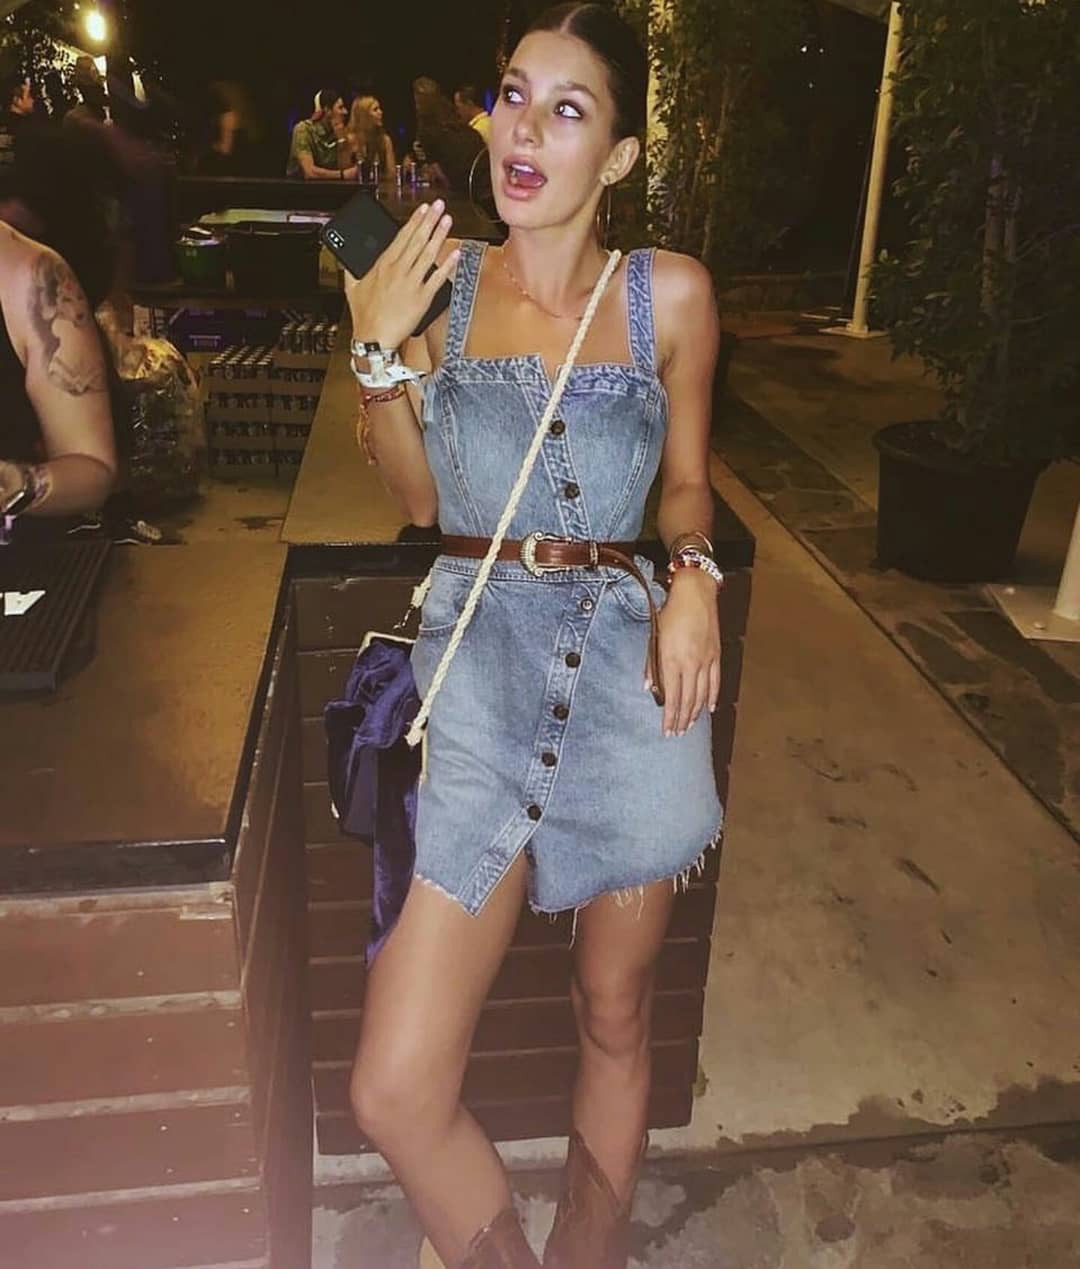 Latest Sexiest Camila Morrone Snapshot Insta: Instagram photos,  Hot Girls Instagram,  top Instagram models,  instagram models,  Camila Morrone,  Adorable Camila Morrone  